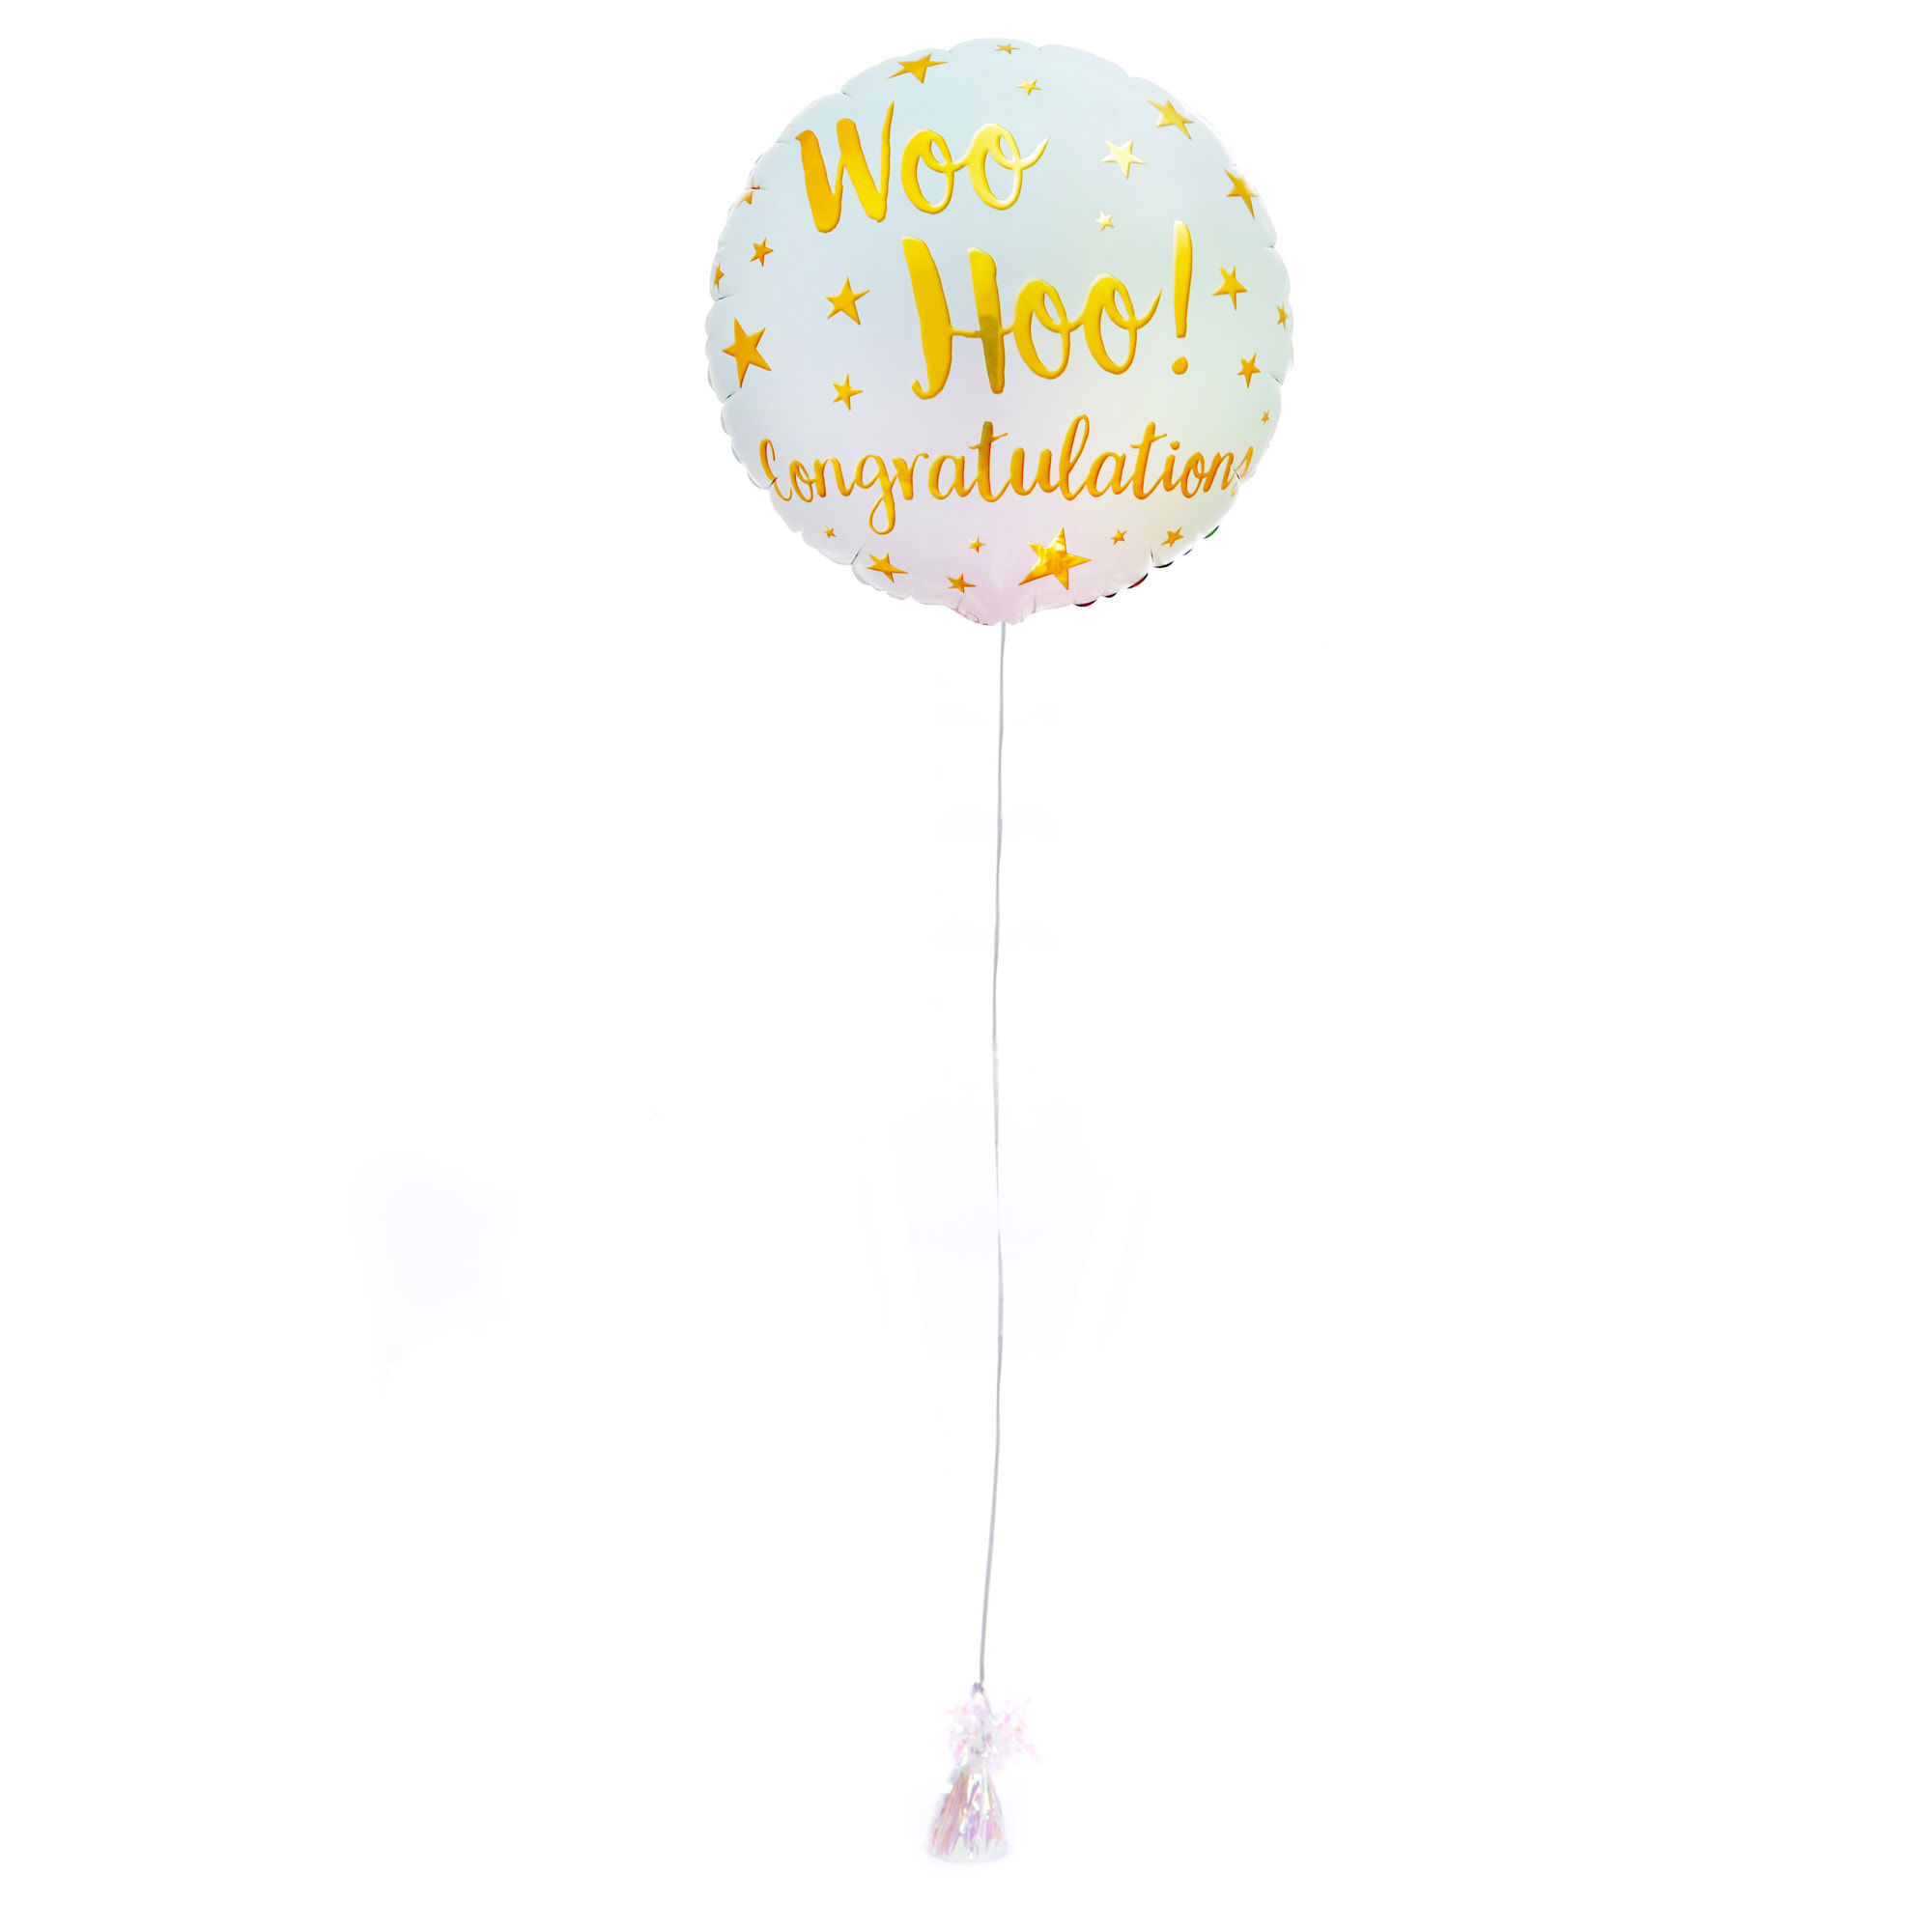 Woo Hoo! Congratulations Balloon & Lindt Chocolates - FREE GIFT CARD!